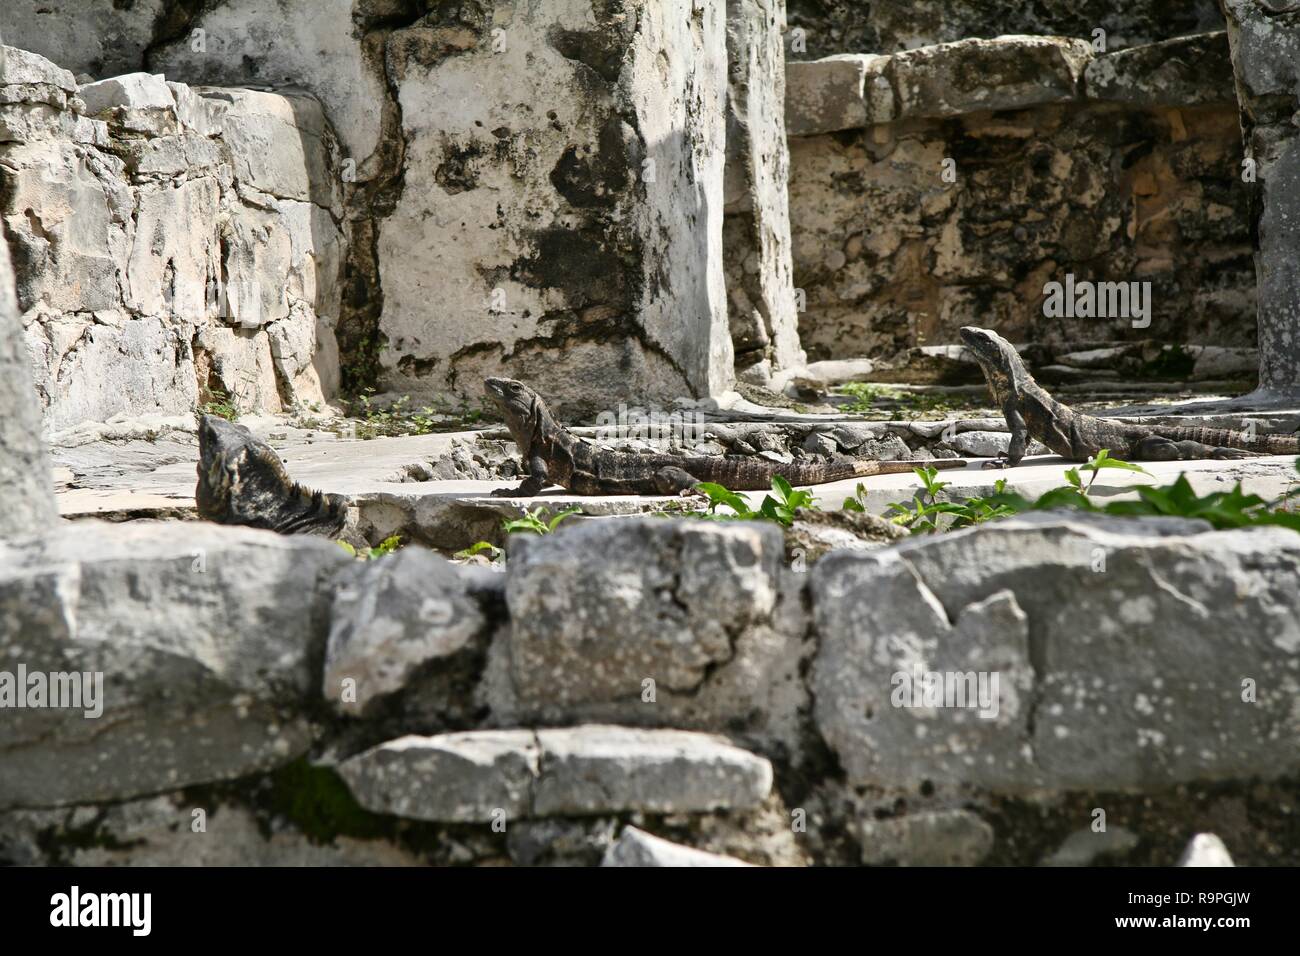 Iguana sunning stessi sulla pietra calda resti in Messico Foto Stock